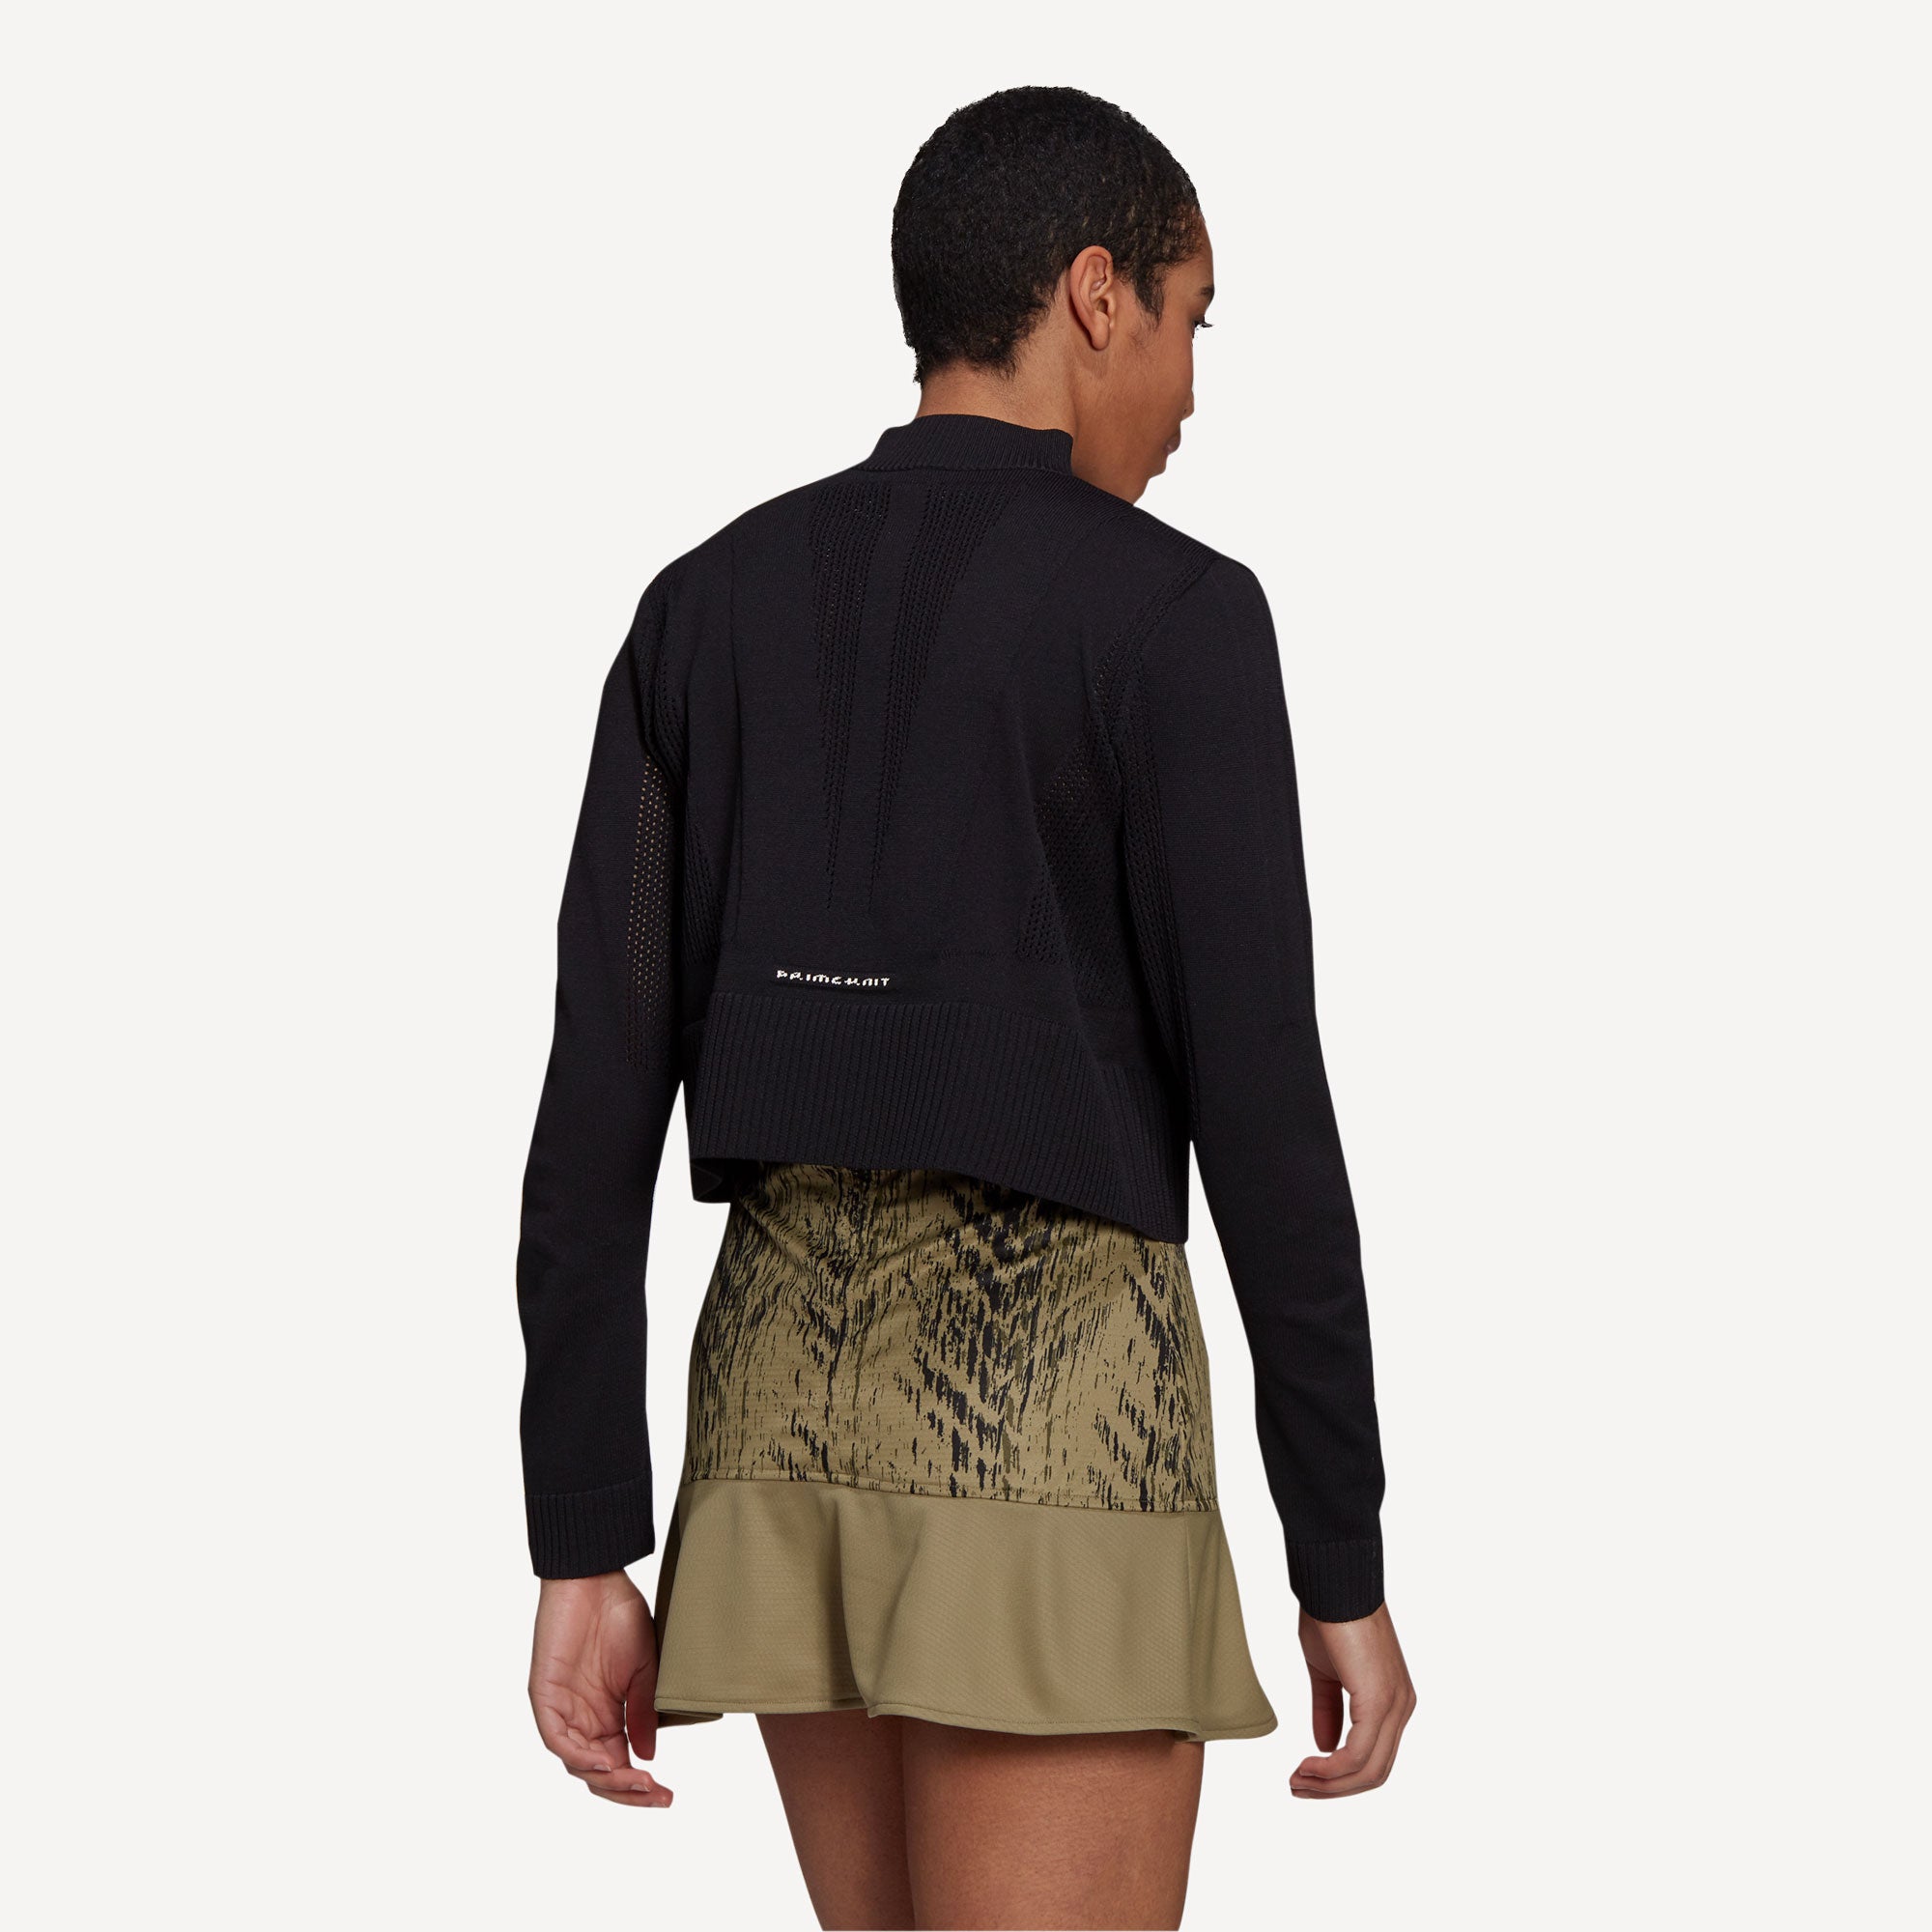 adidas Primeknit Women's Tennis Jacket Black (2)